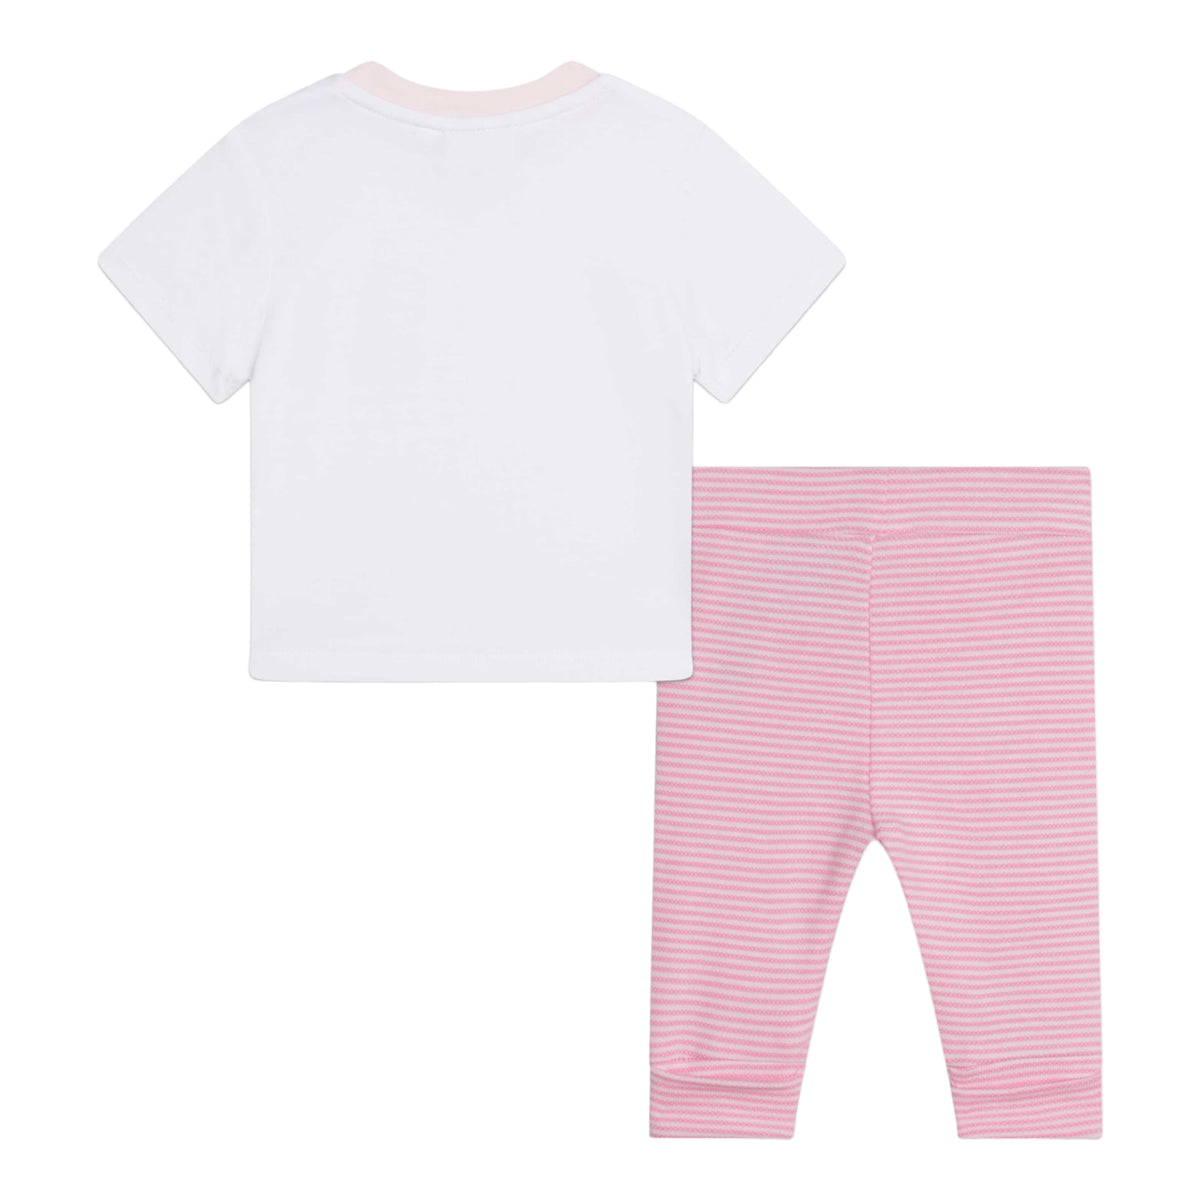 Hugo Boss Kids Girl's Toddler Girls T-Shirt and Pants Set